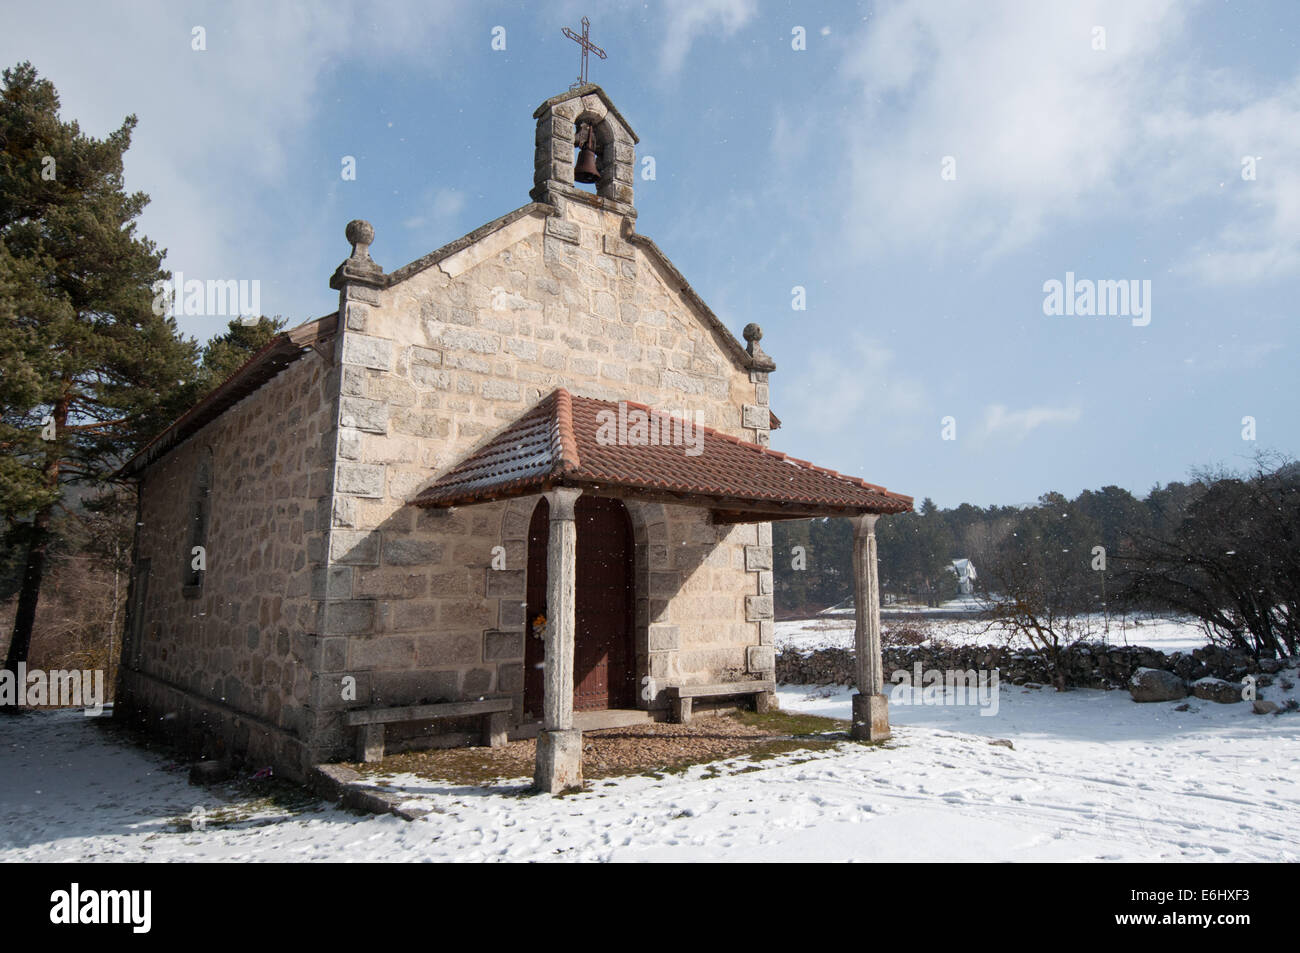 Little church in snow Stock Photo